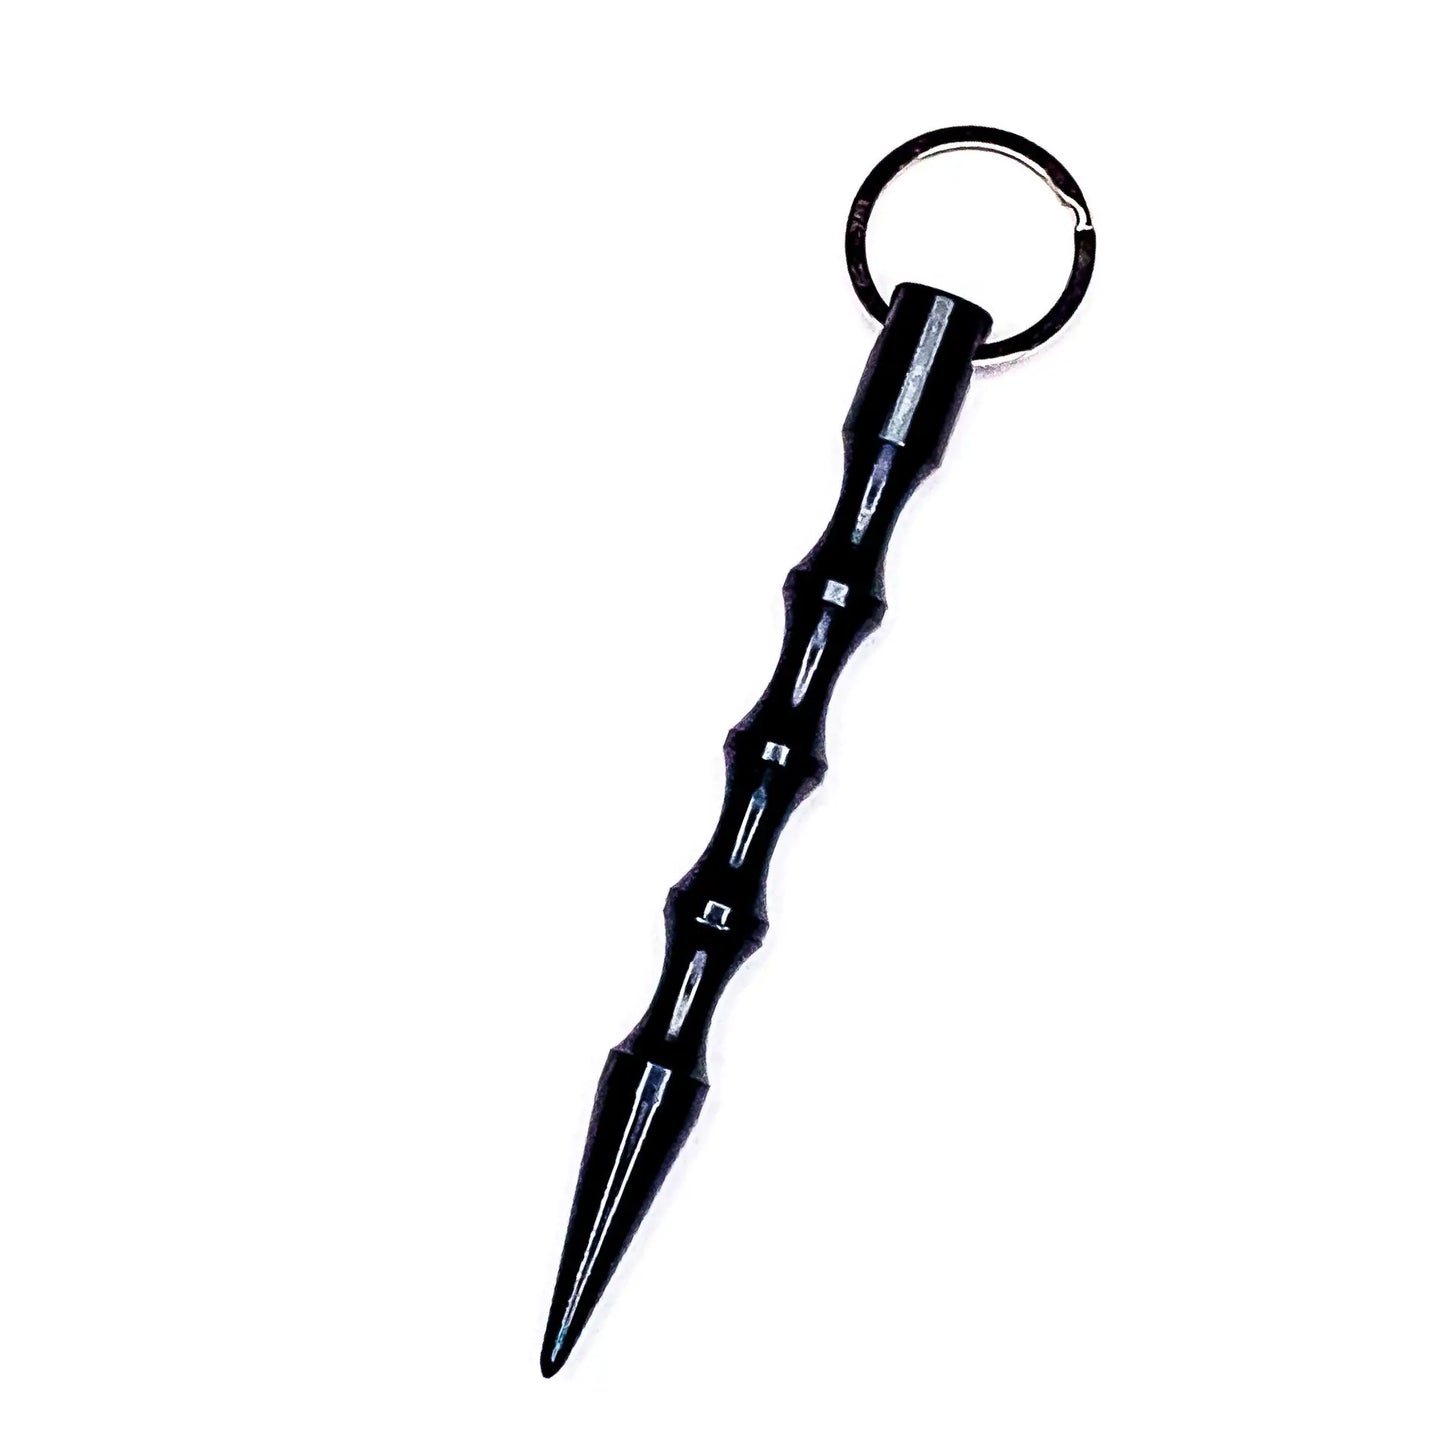 Marlin Spike Key Chain - Black